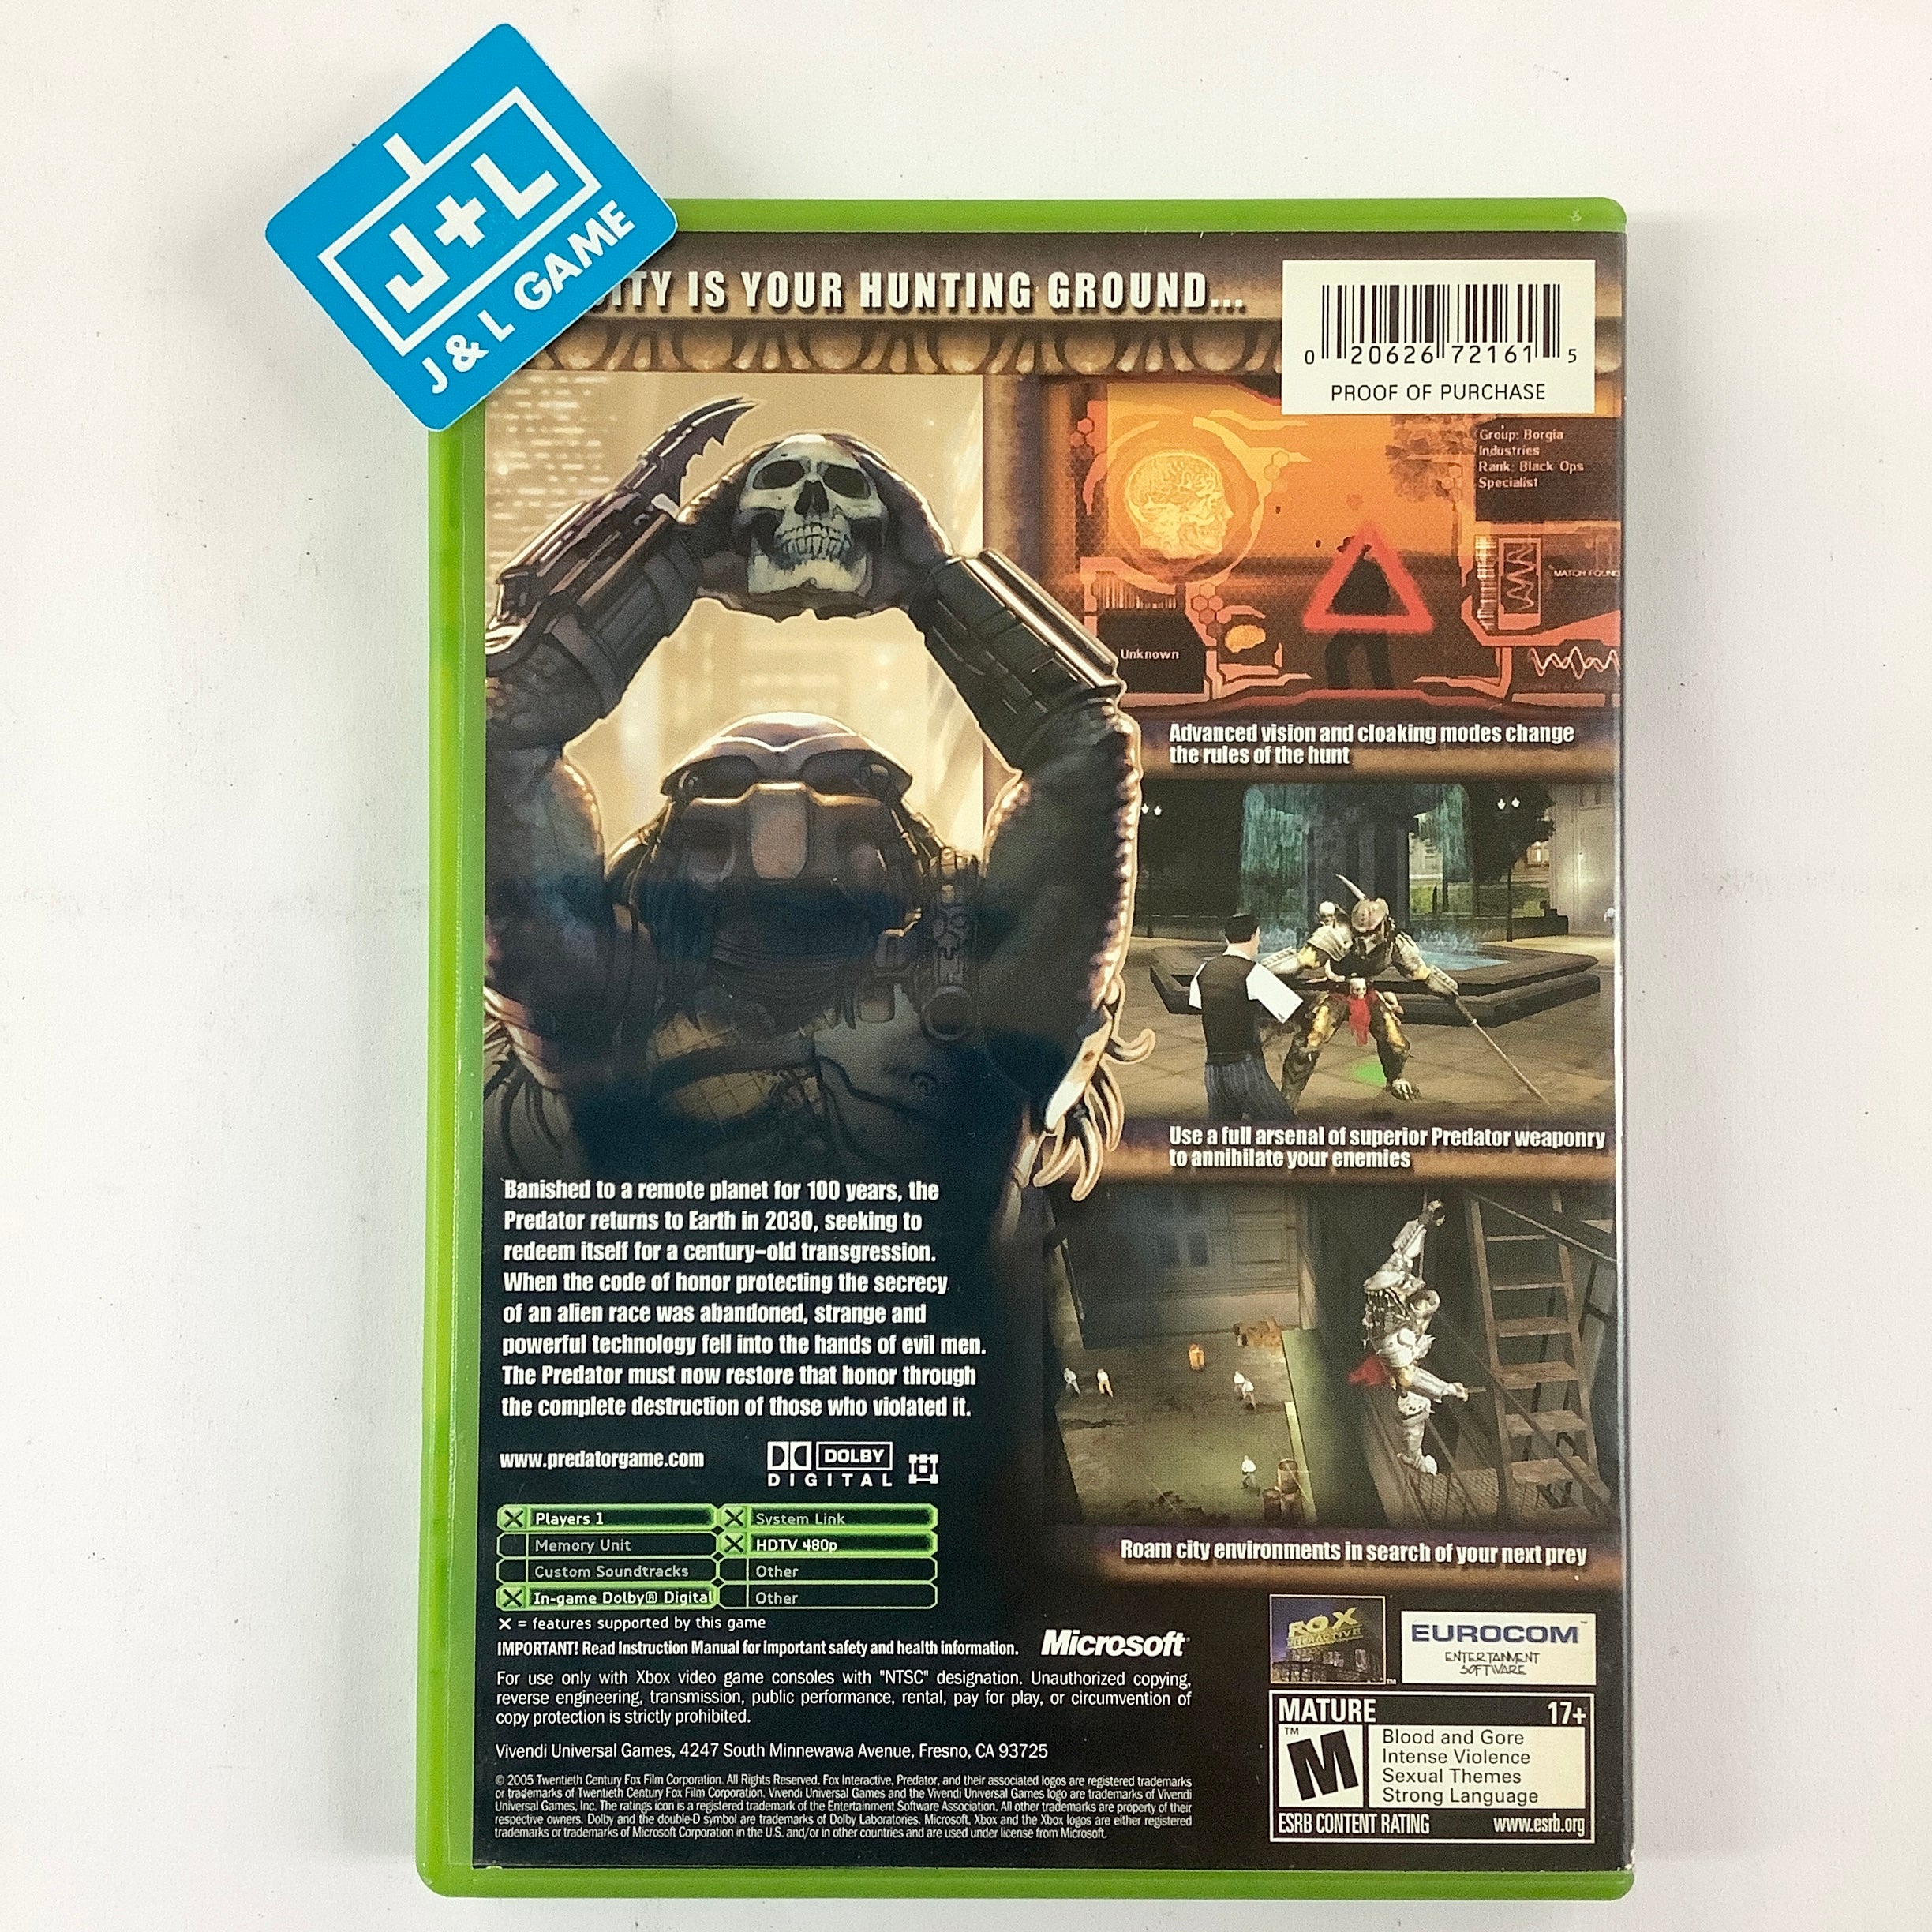 Predator: Concrete Jungle - Xbox [Pre-Owned] Video Games VU Games   